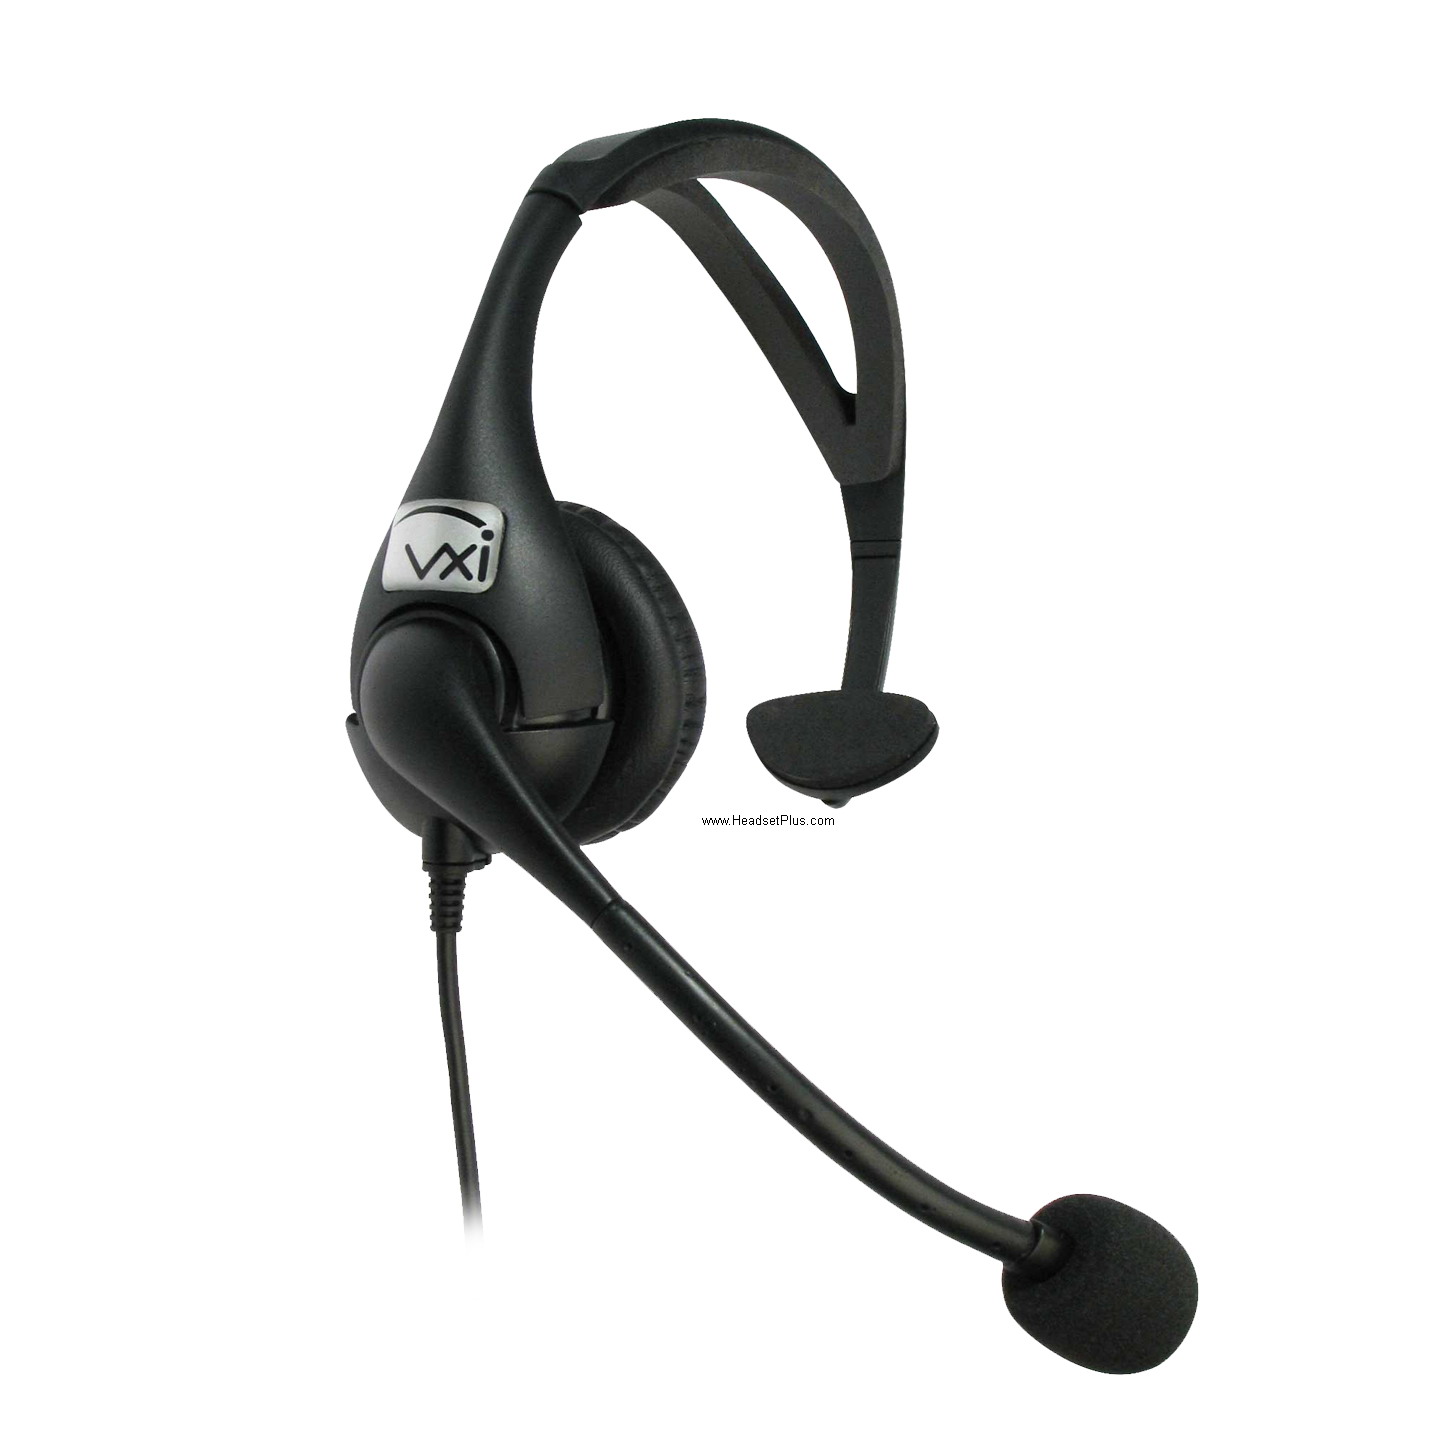 jabra vxi vr12 warehouse convertible headset view